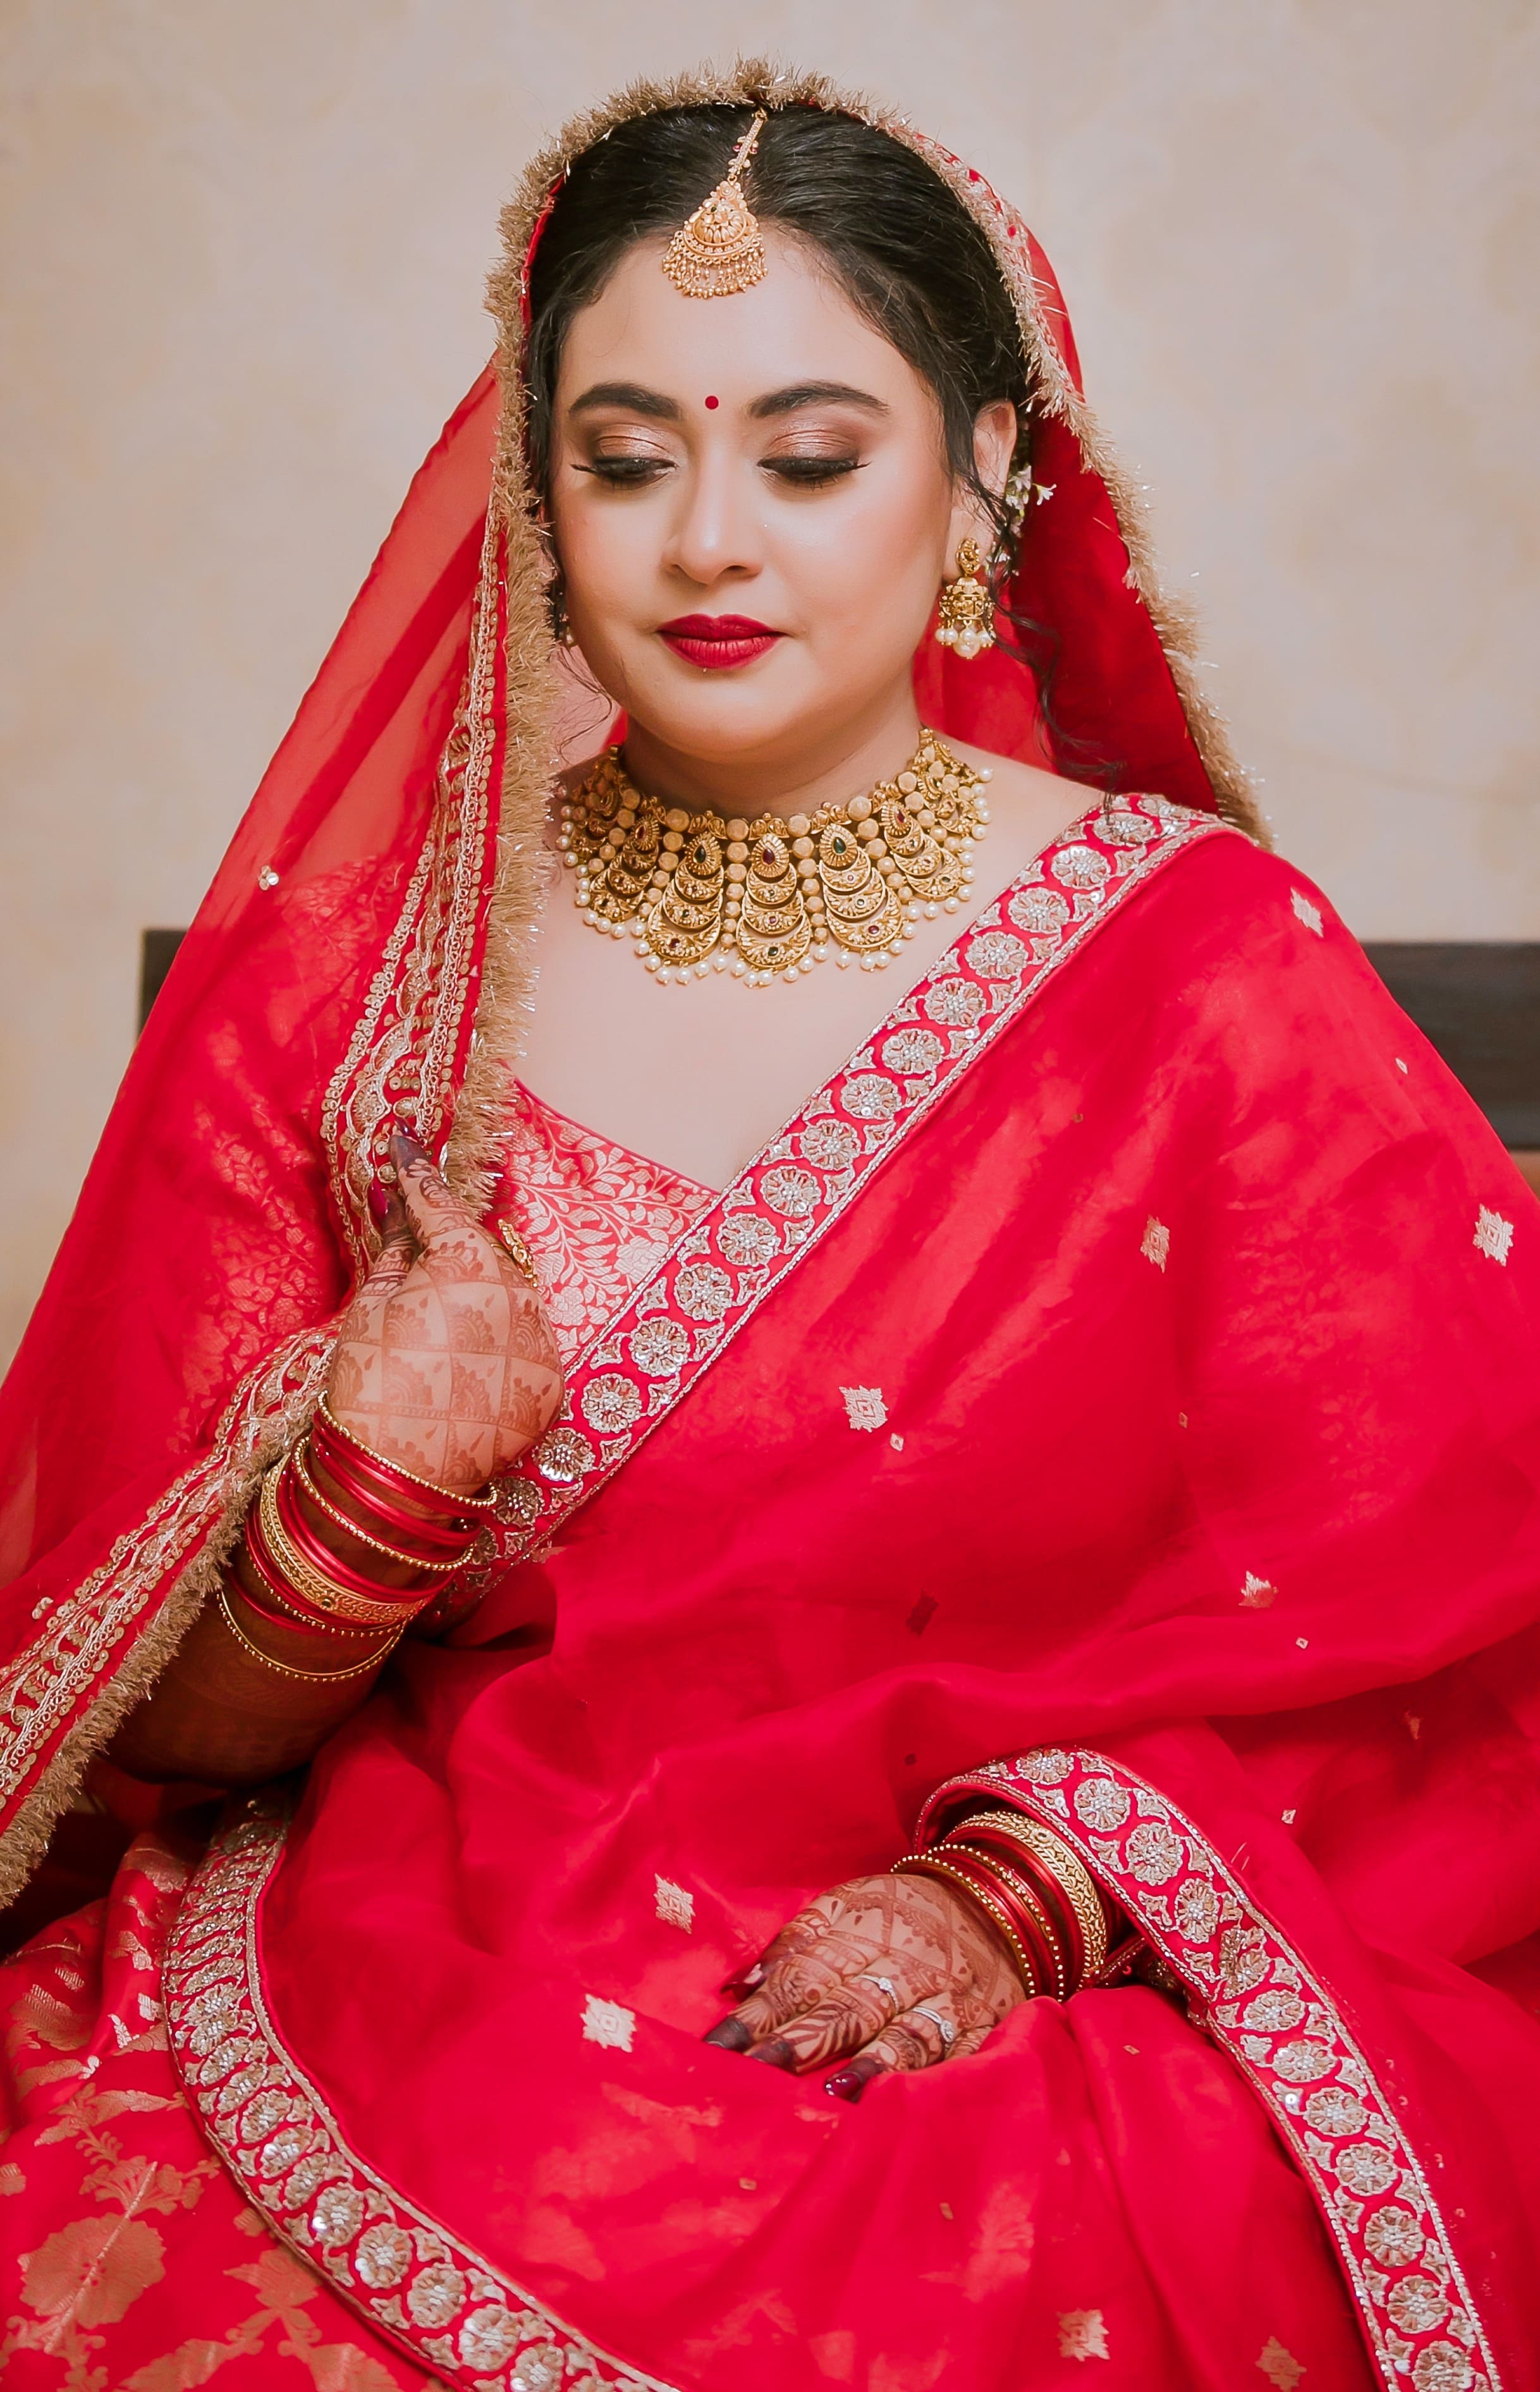 Modern Marathi Wedding In Nagpur With Distinct Themes For Each Event |  WedMeGood